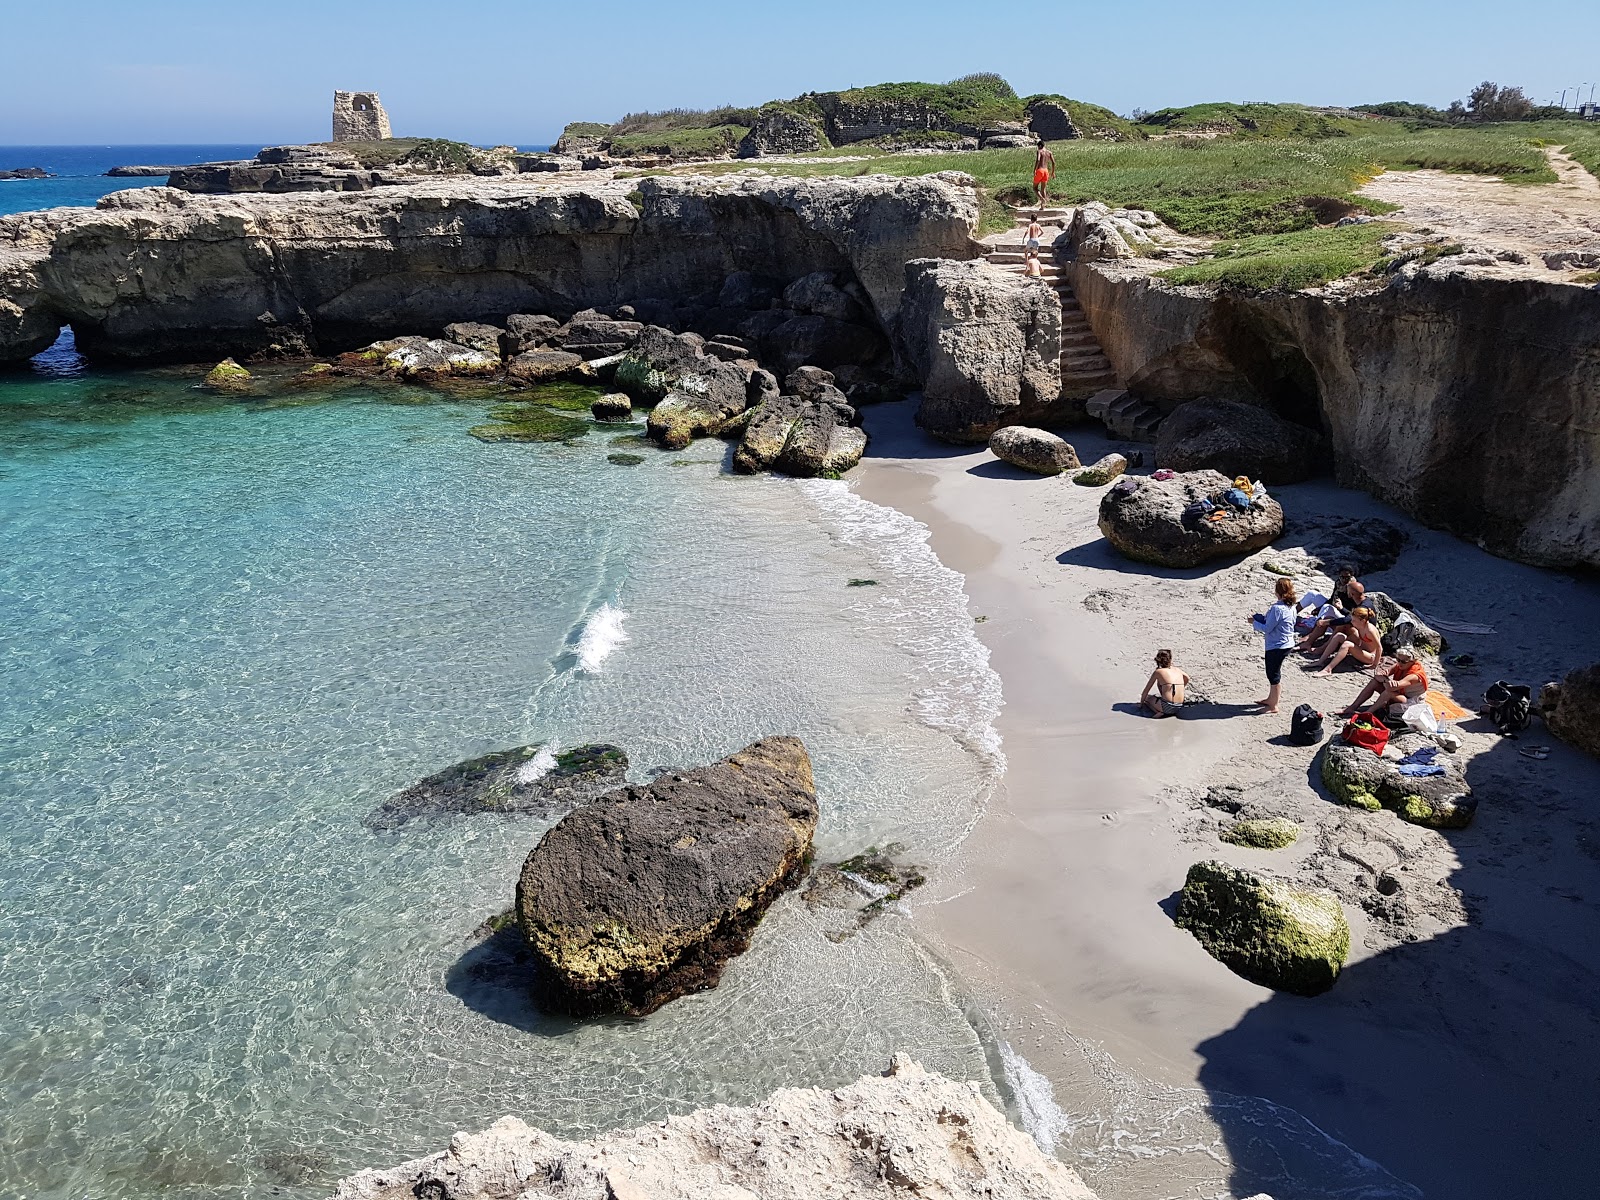 Photo de Spiaggia di Portulignu avec l'eau cristalline de surface